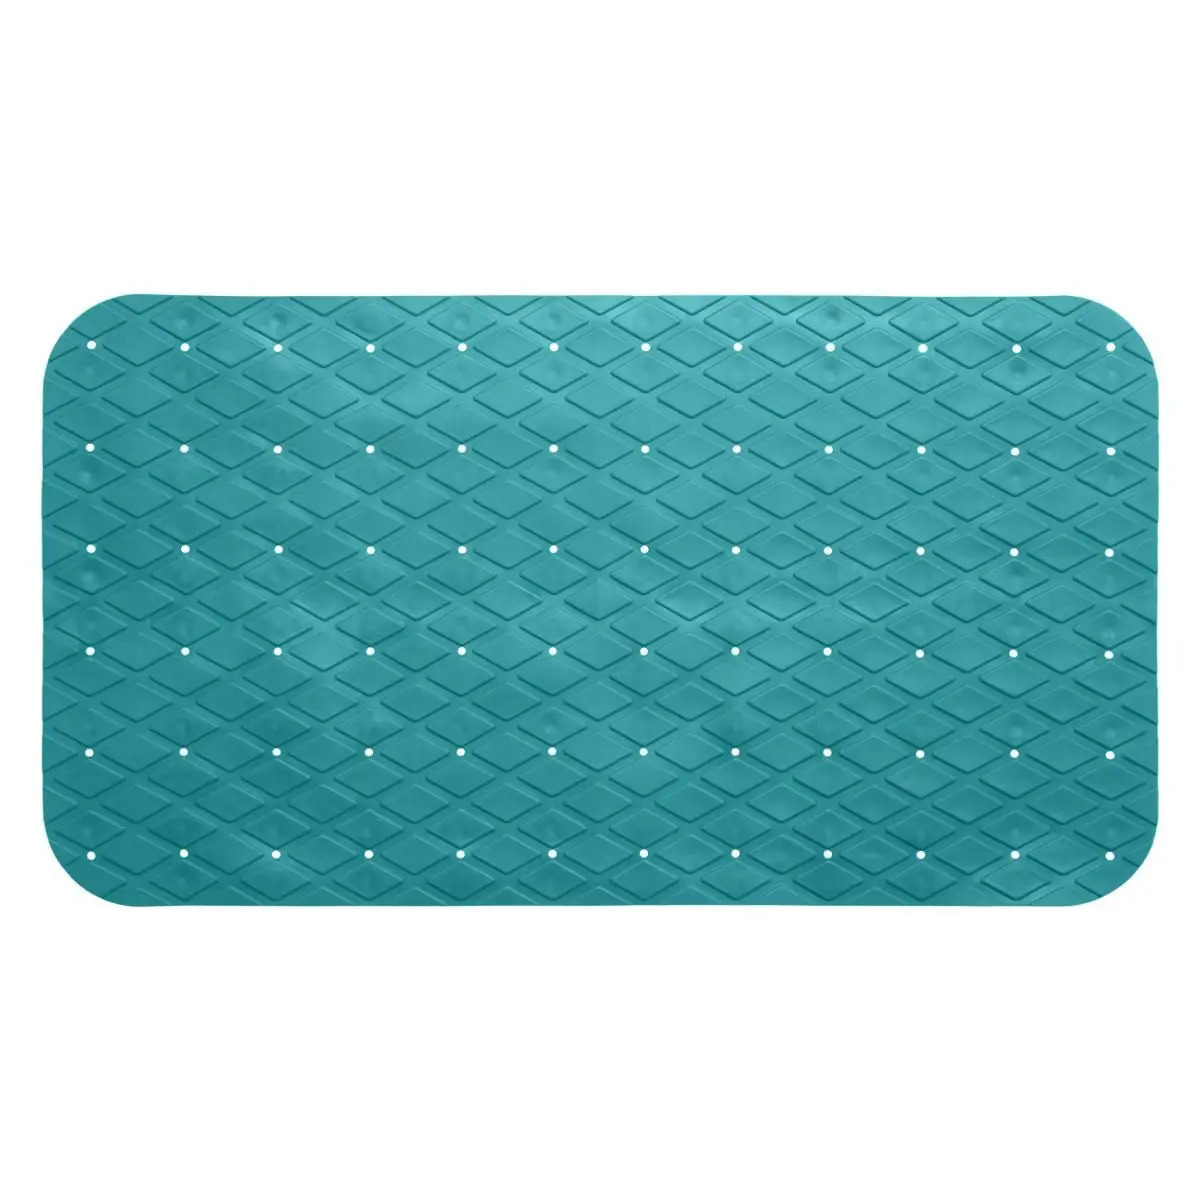 Anti-slip badkamer douche-bad mat turquoise blauw 70 x 35 cm rechthoekig